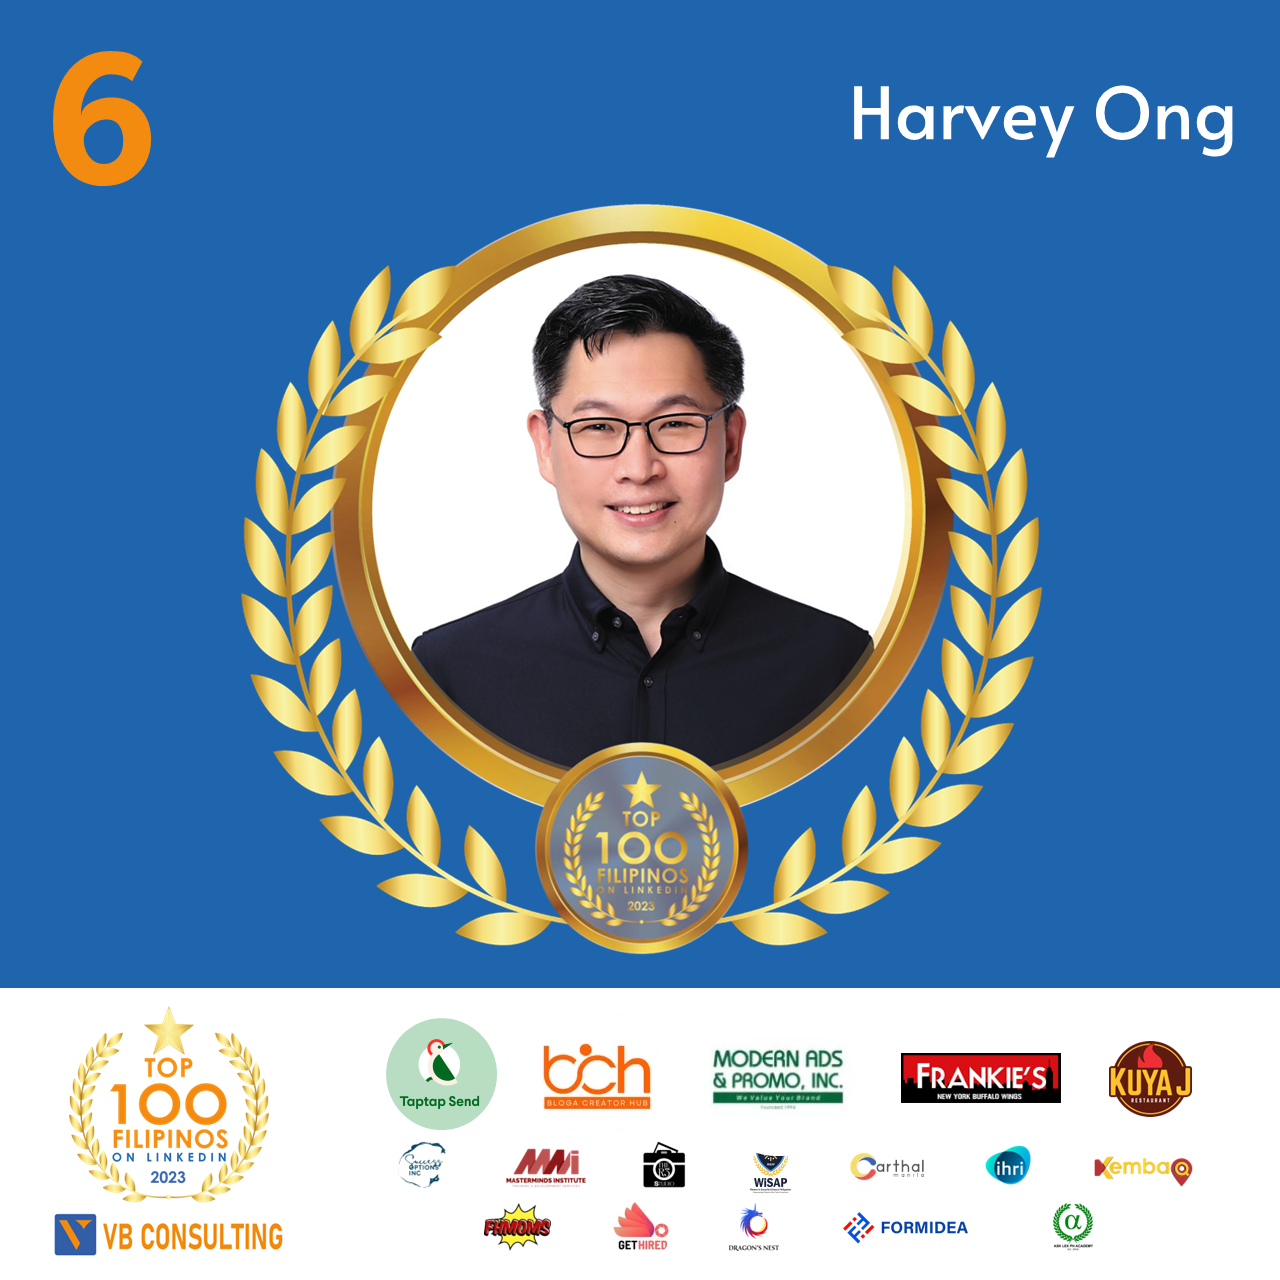 Harvey Ong